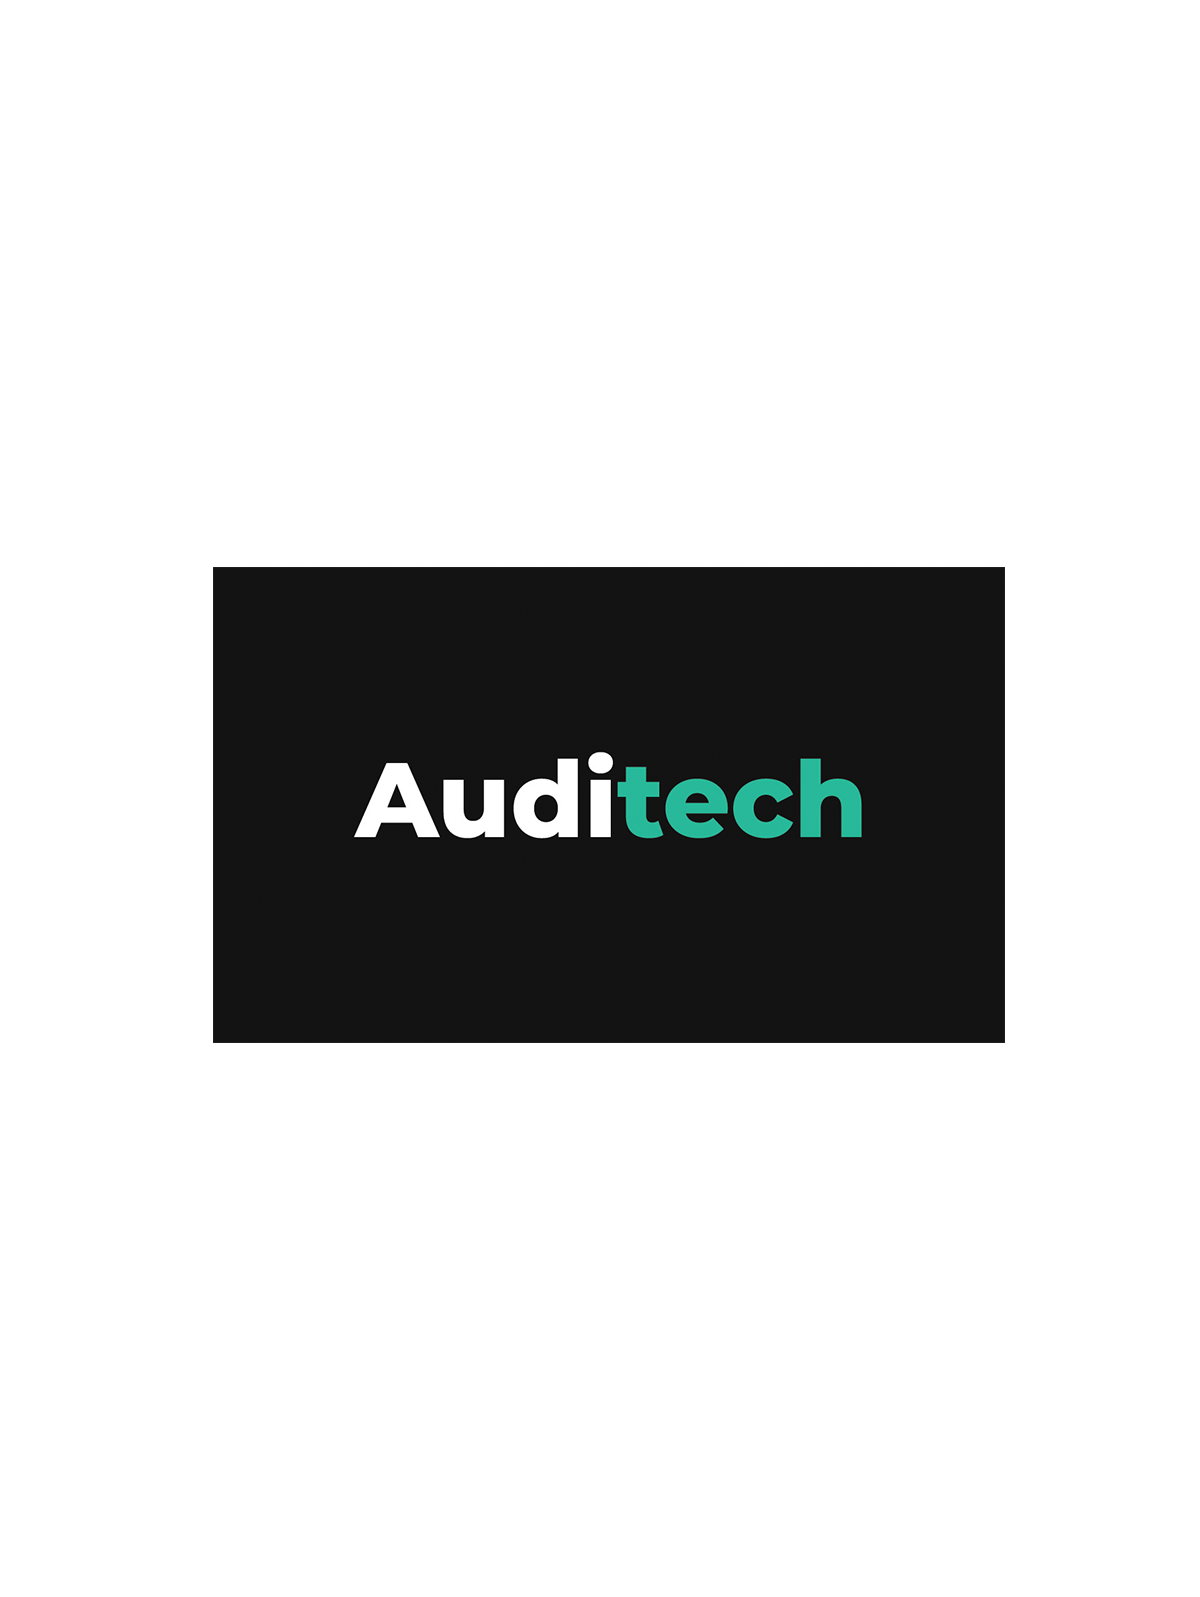 Auditech